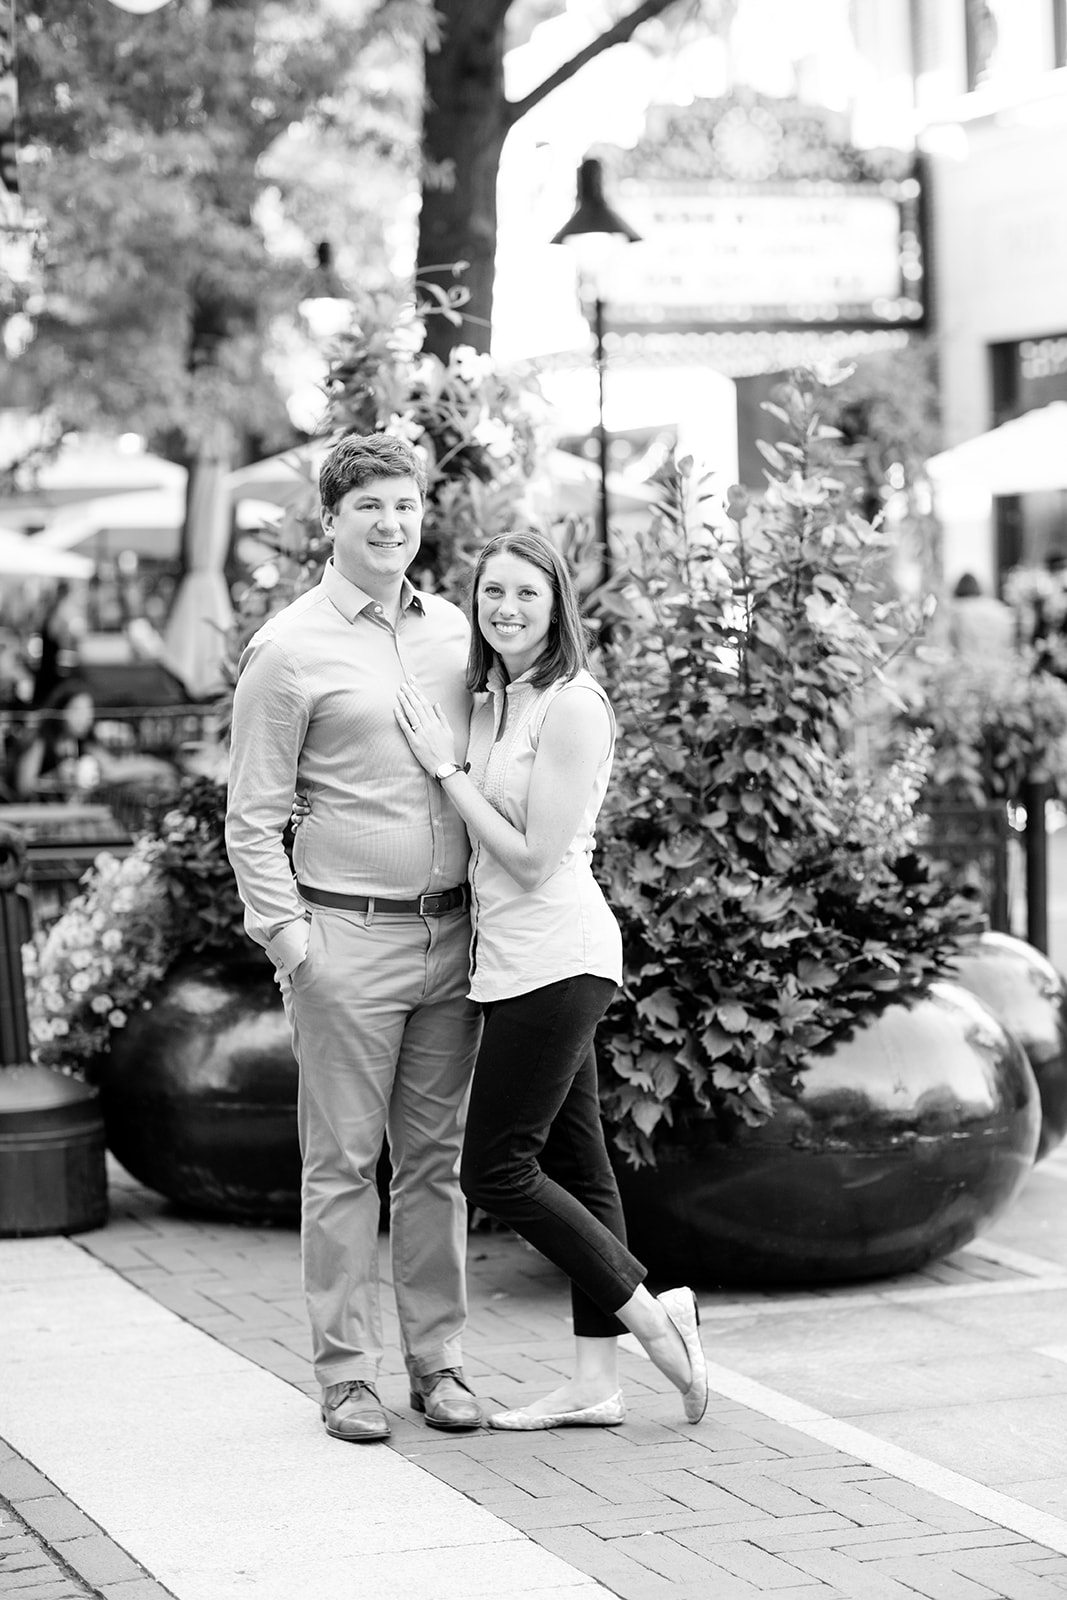 Downtown Mall Couples Photo Shoot Charlottesville Va Photographer - Image Property of www.j-dphoto.com